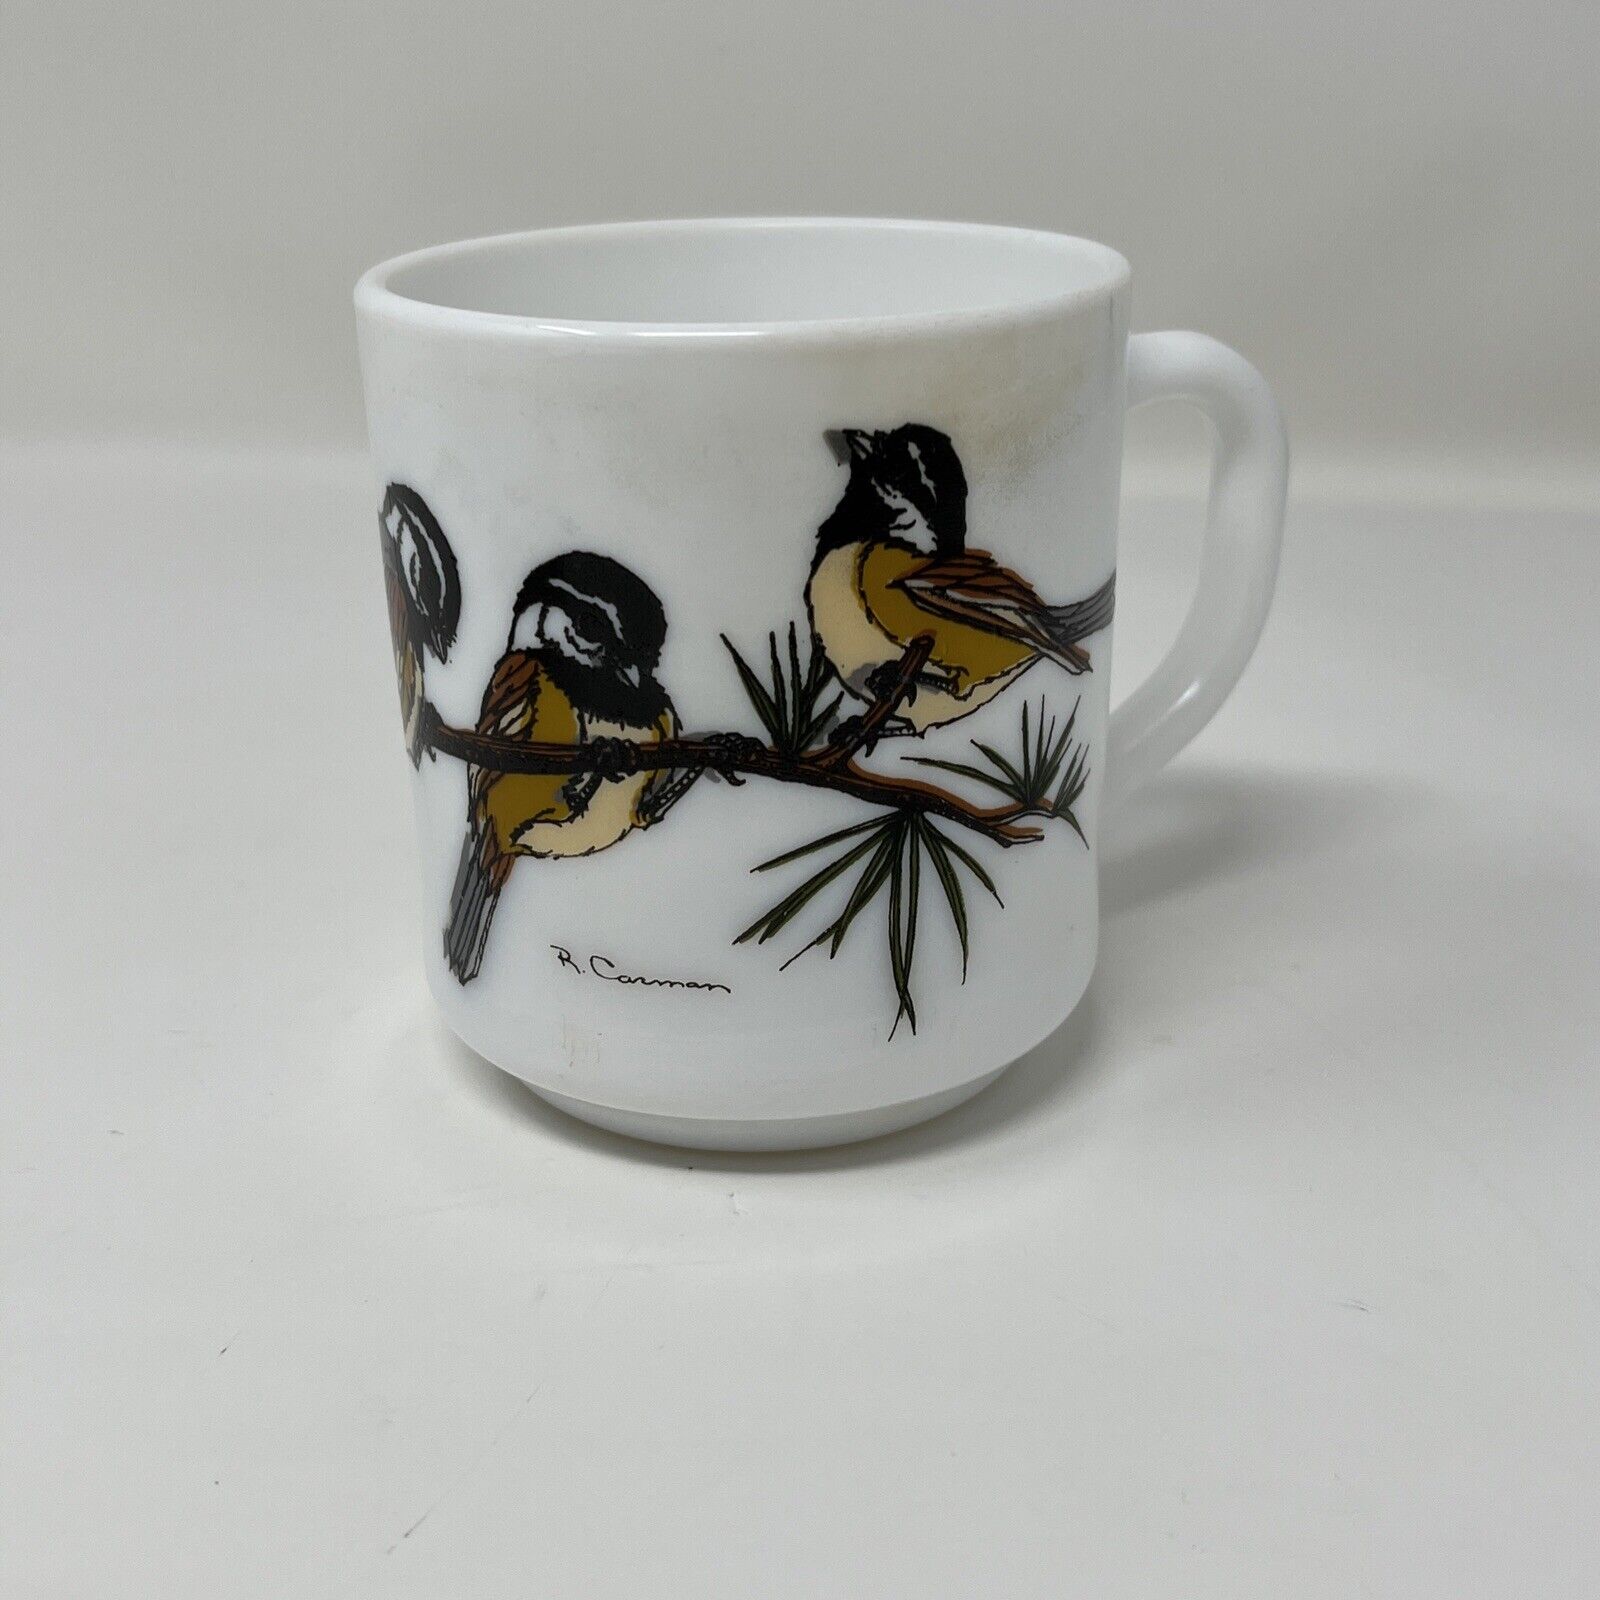 Vintage Arcopal France Milk Glass Coffee Mug Cup Chickadee Birds Signed R Carman